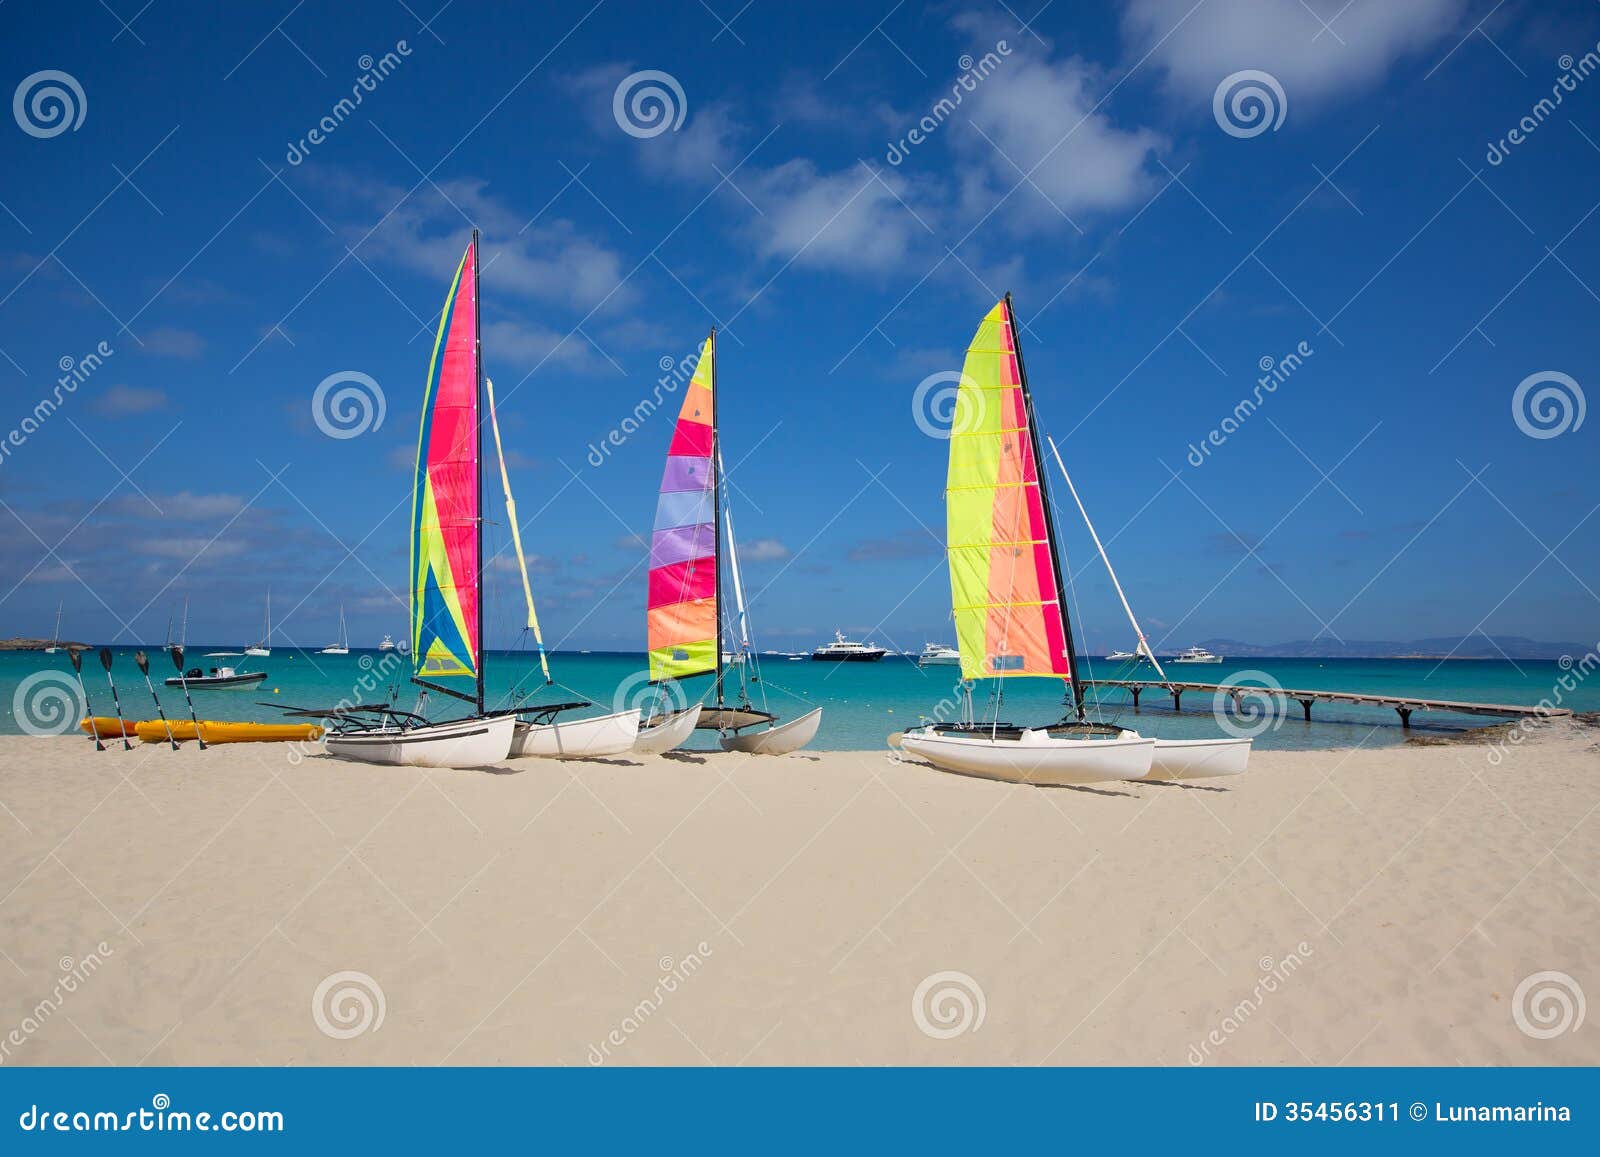 Catamaran sailboats in Illetes Formentera beach at Balearic Islands.